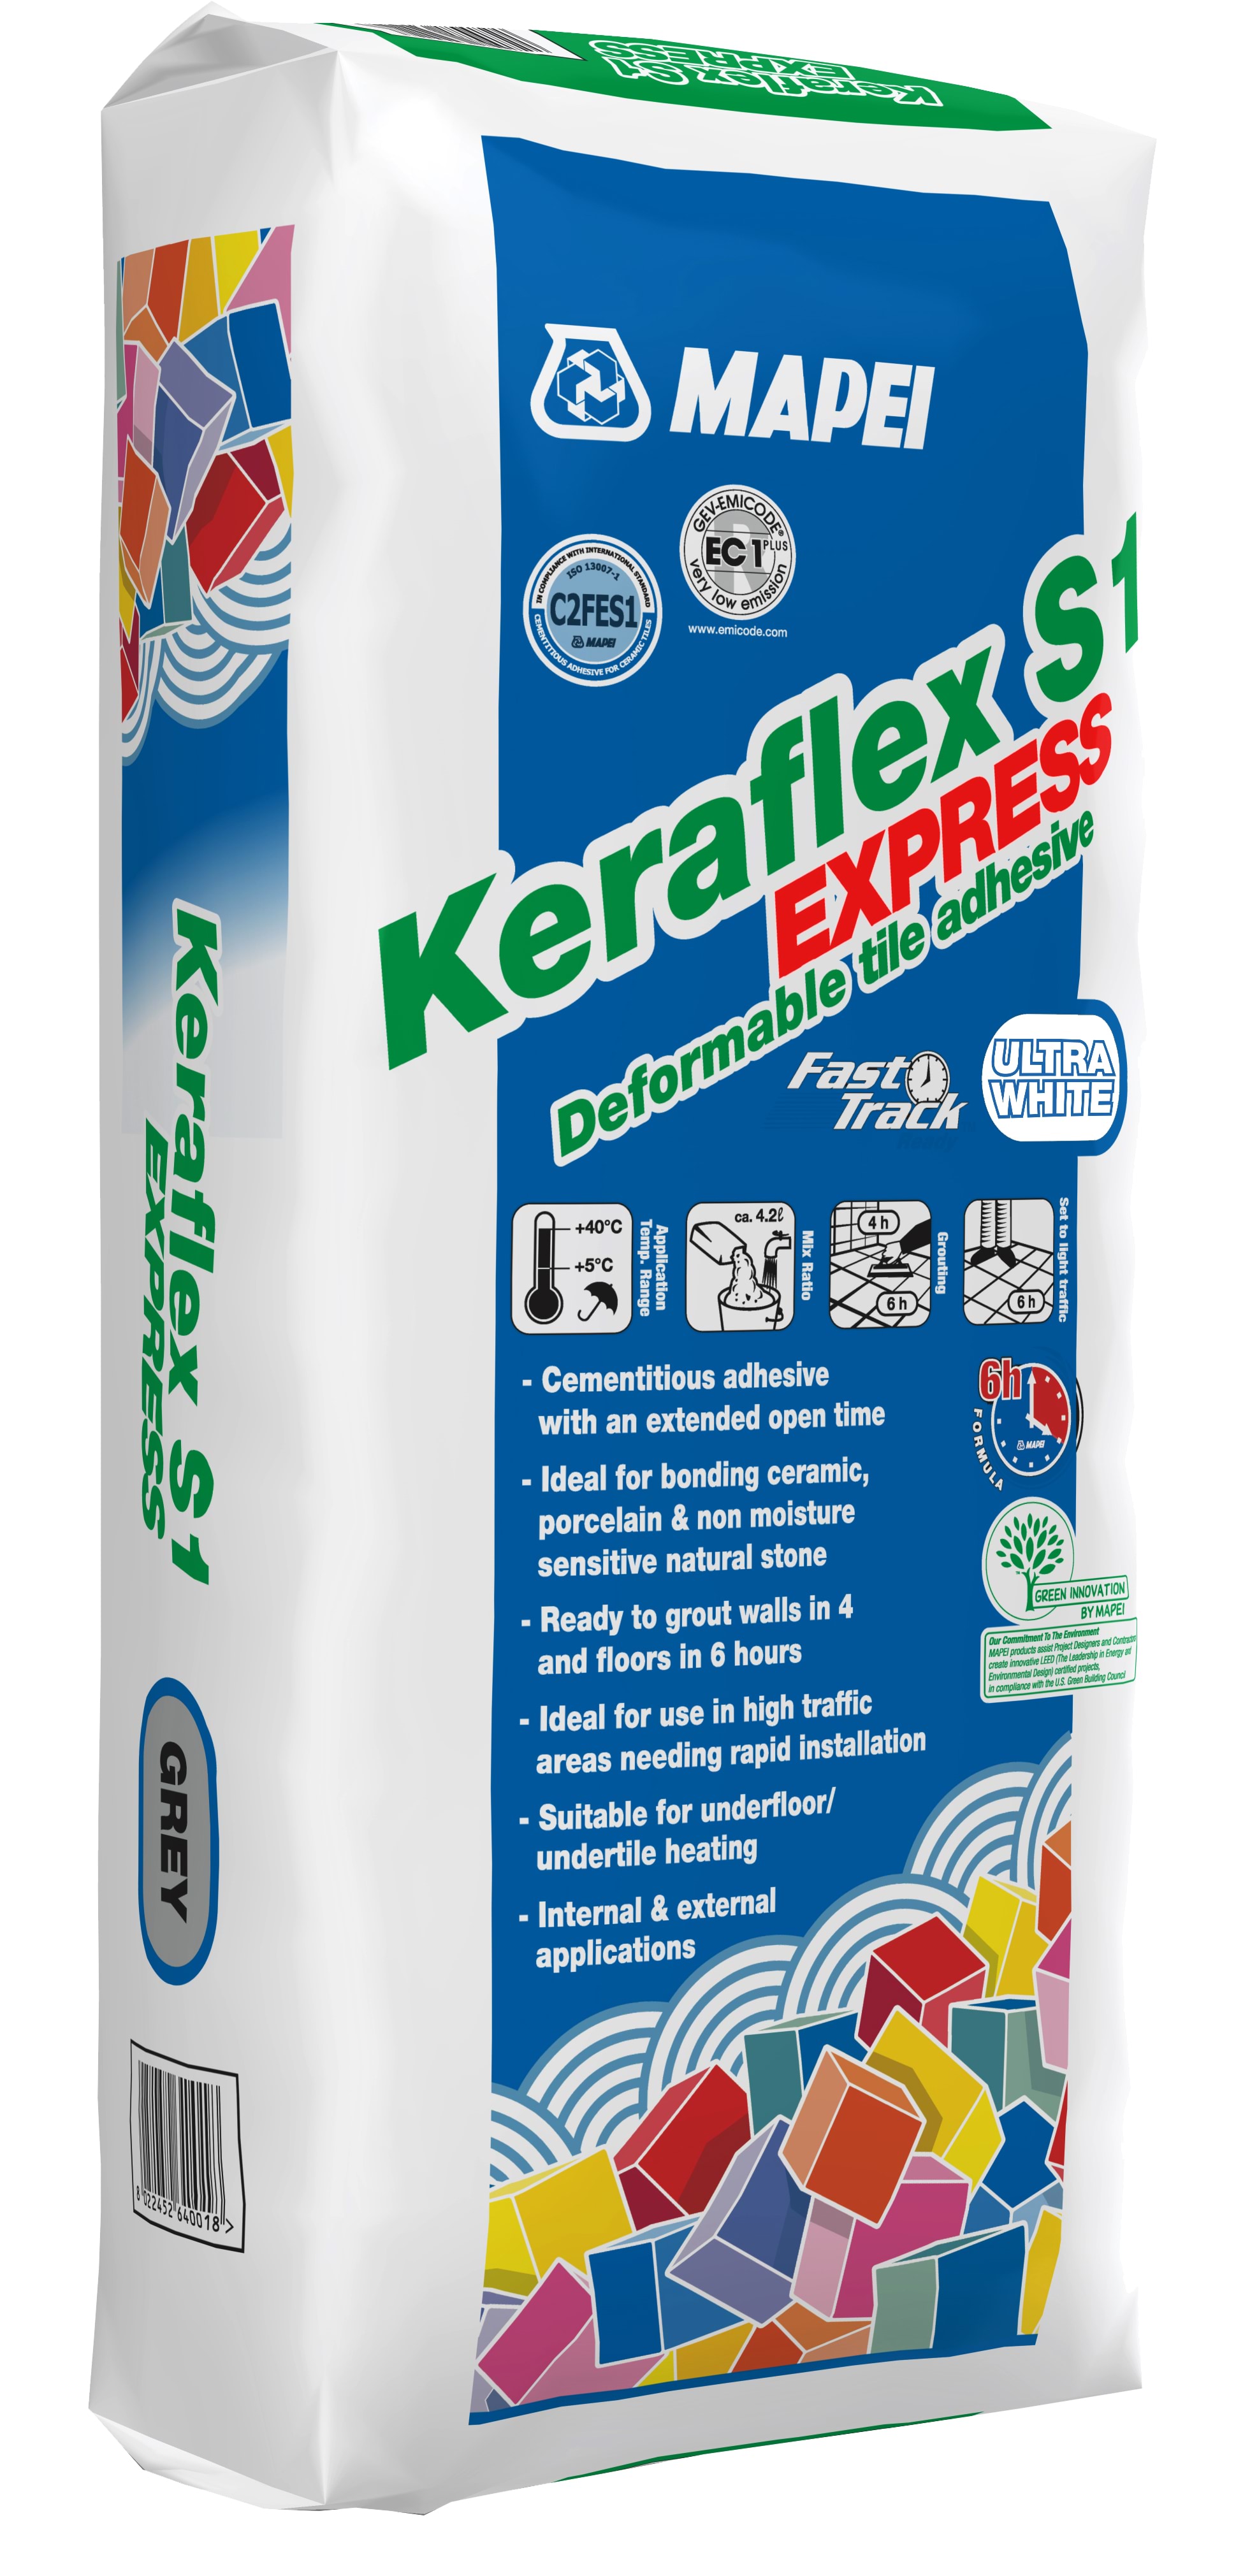 KERAFLEX S1 EXPRESS - 1